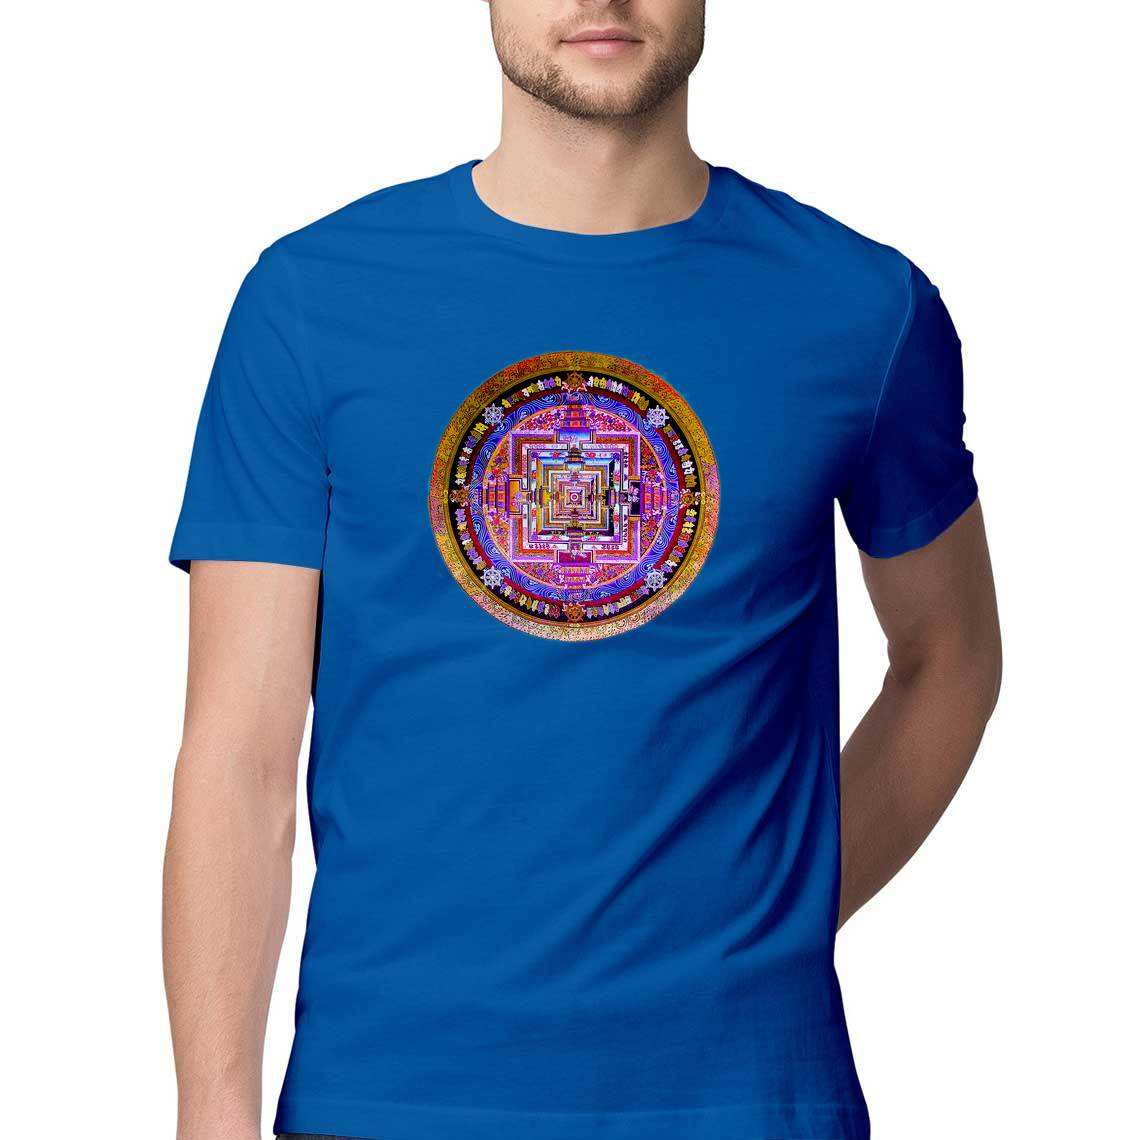 Kalachakra Yantra Men's Graphic T-Shirt - CBD Store India